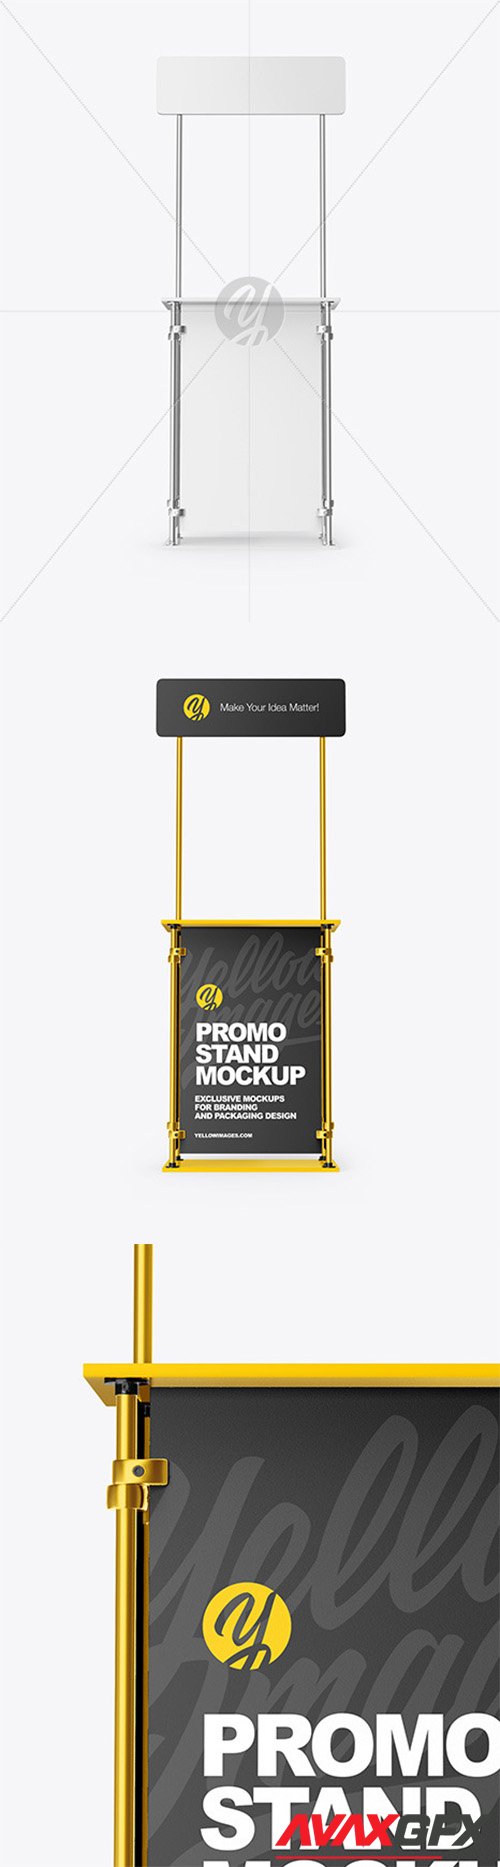 Metallic Promo Stand Mockup 63596